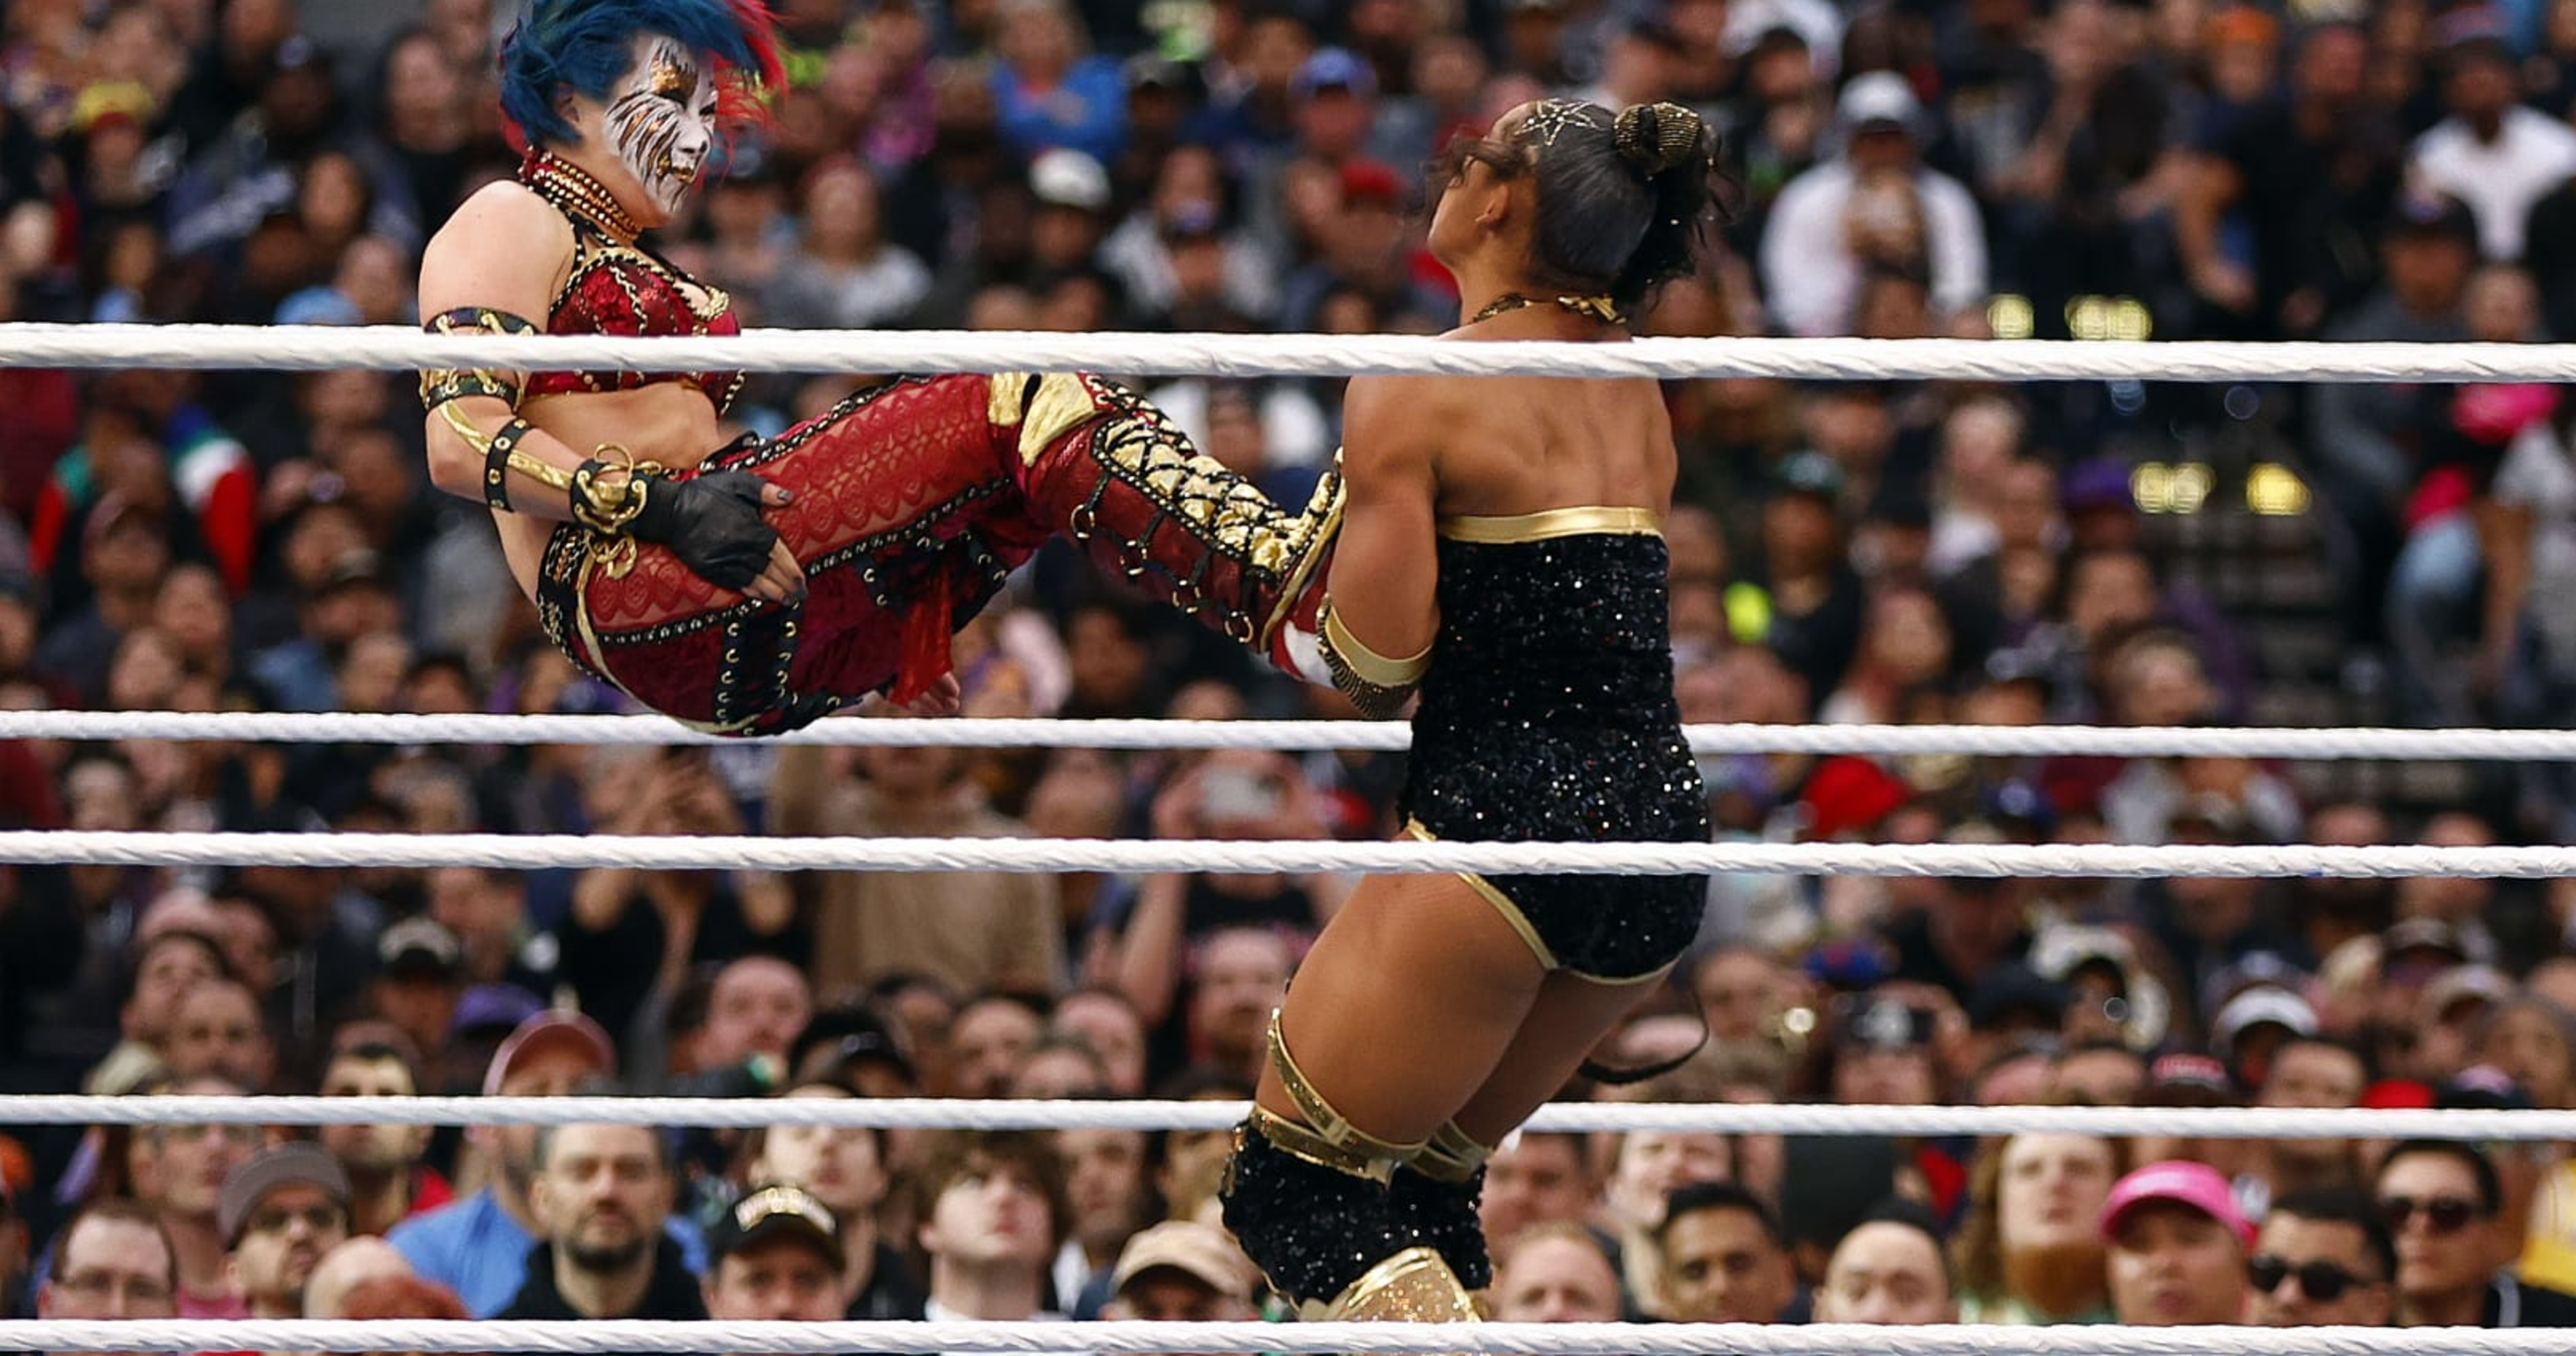 IYO SKY WWE Women's Title Win Not A 'Last Minute' Decision